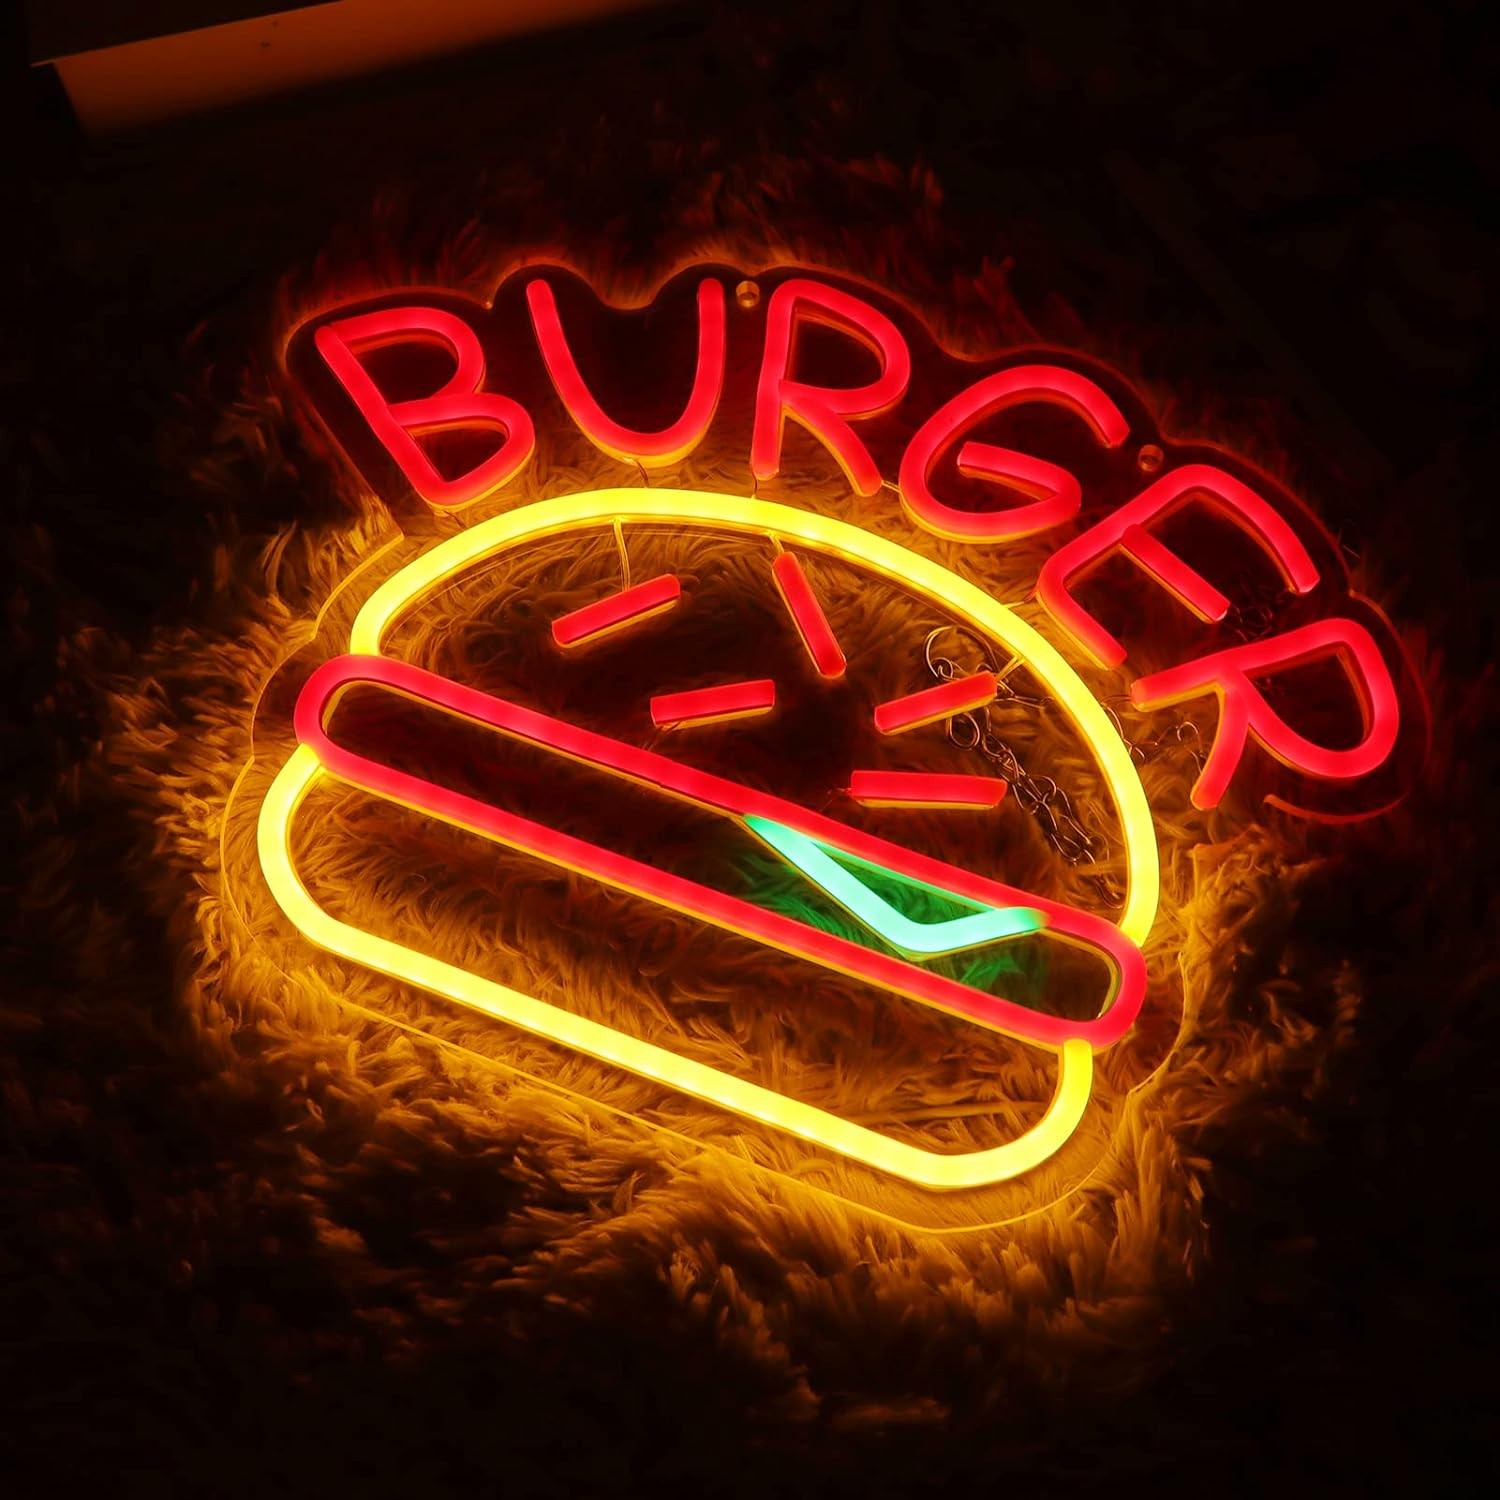 Burger Reklamna svietiaca LED neonová reklama hamburger